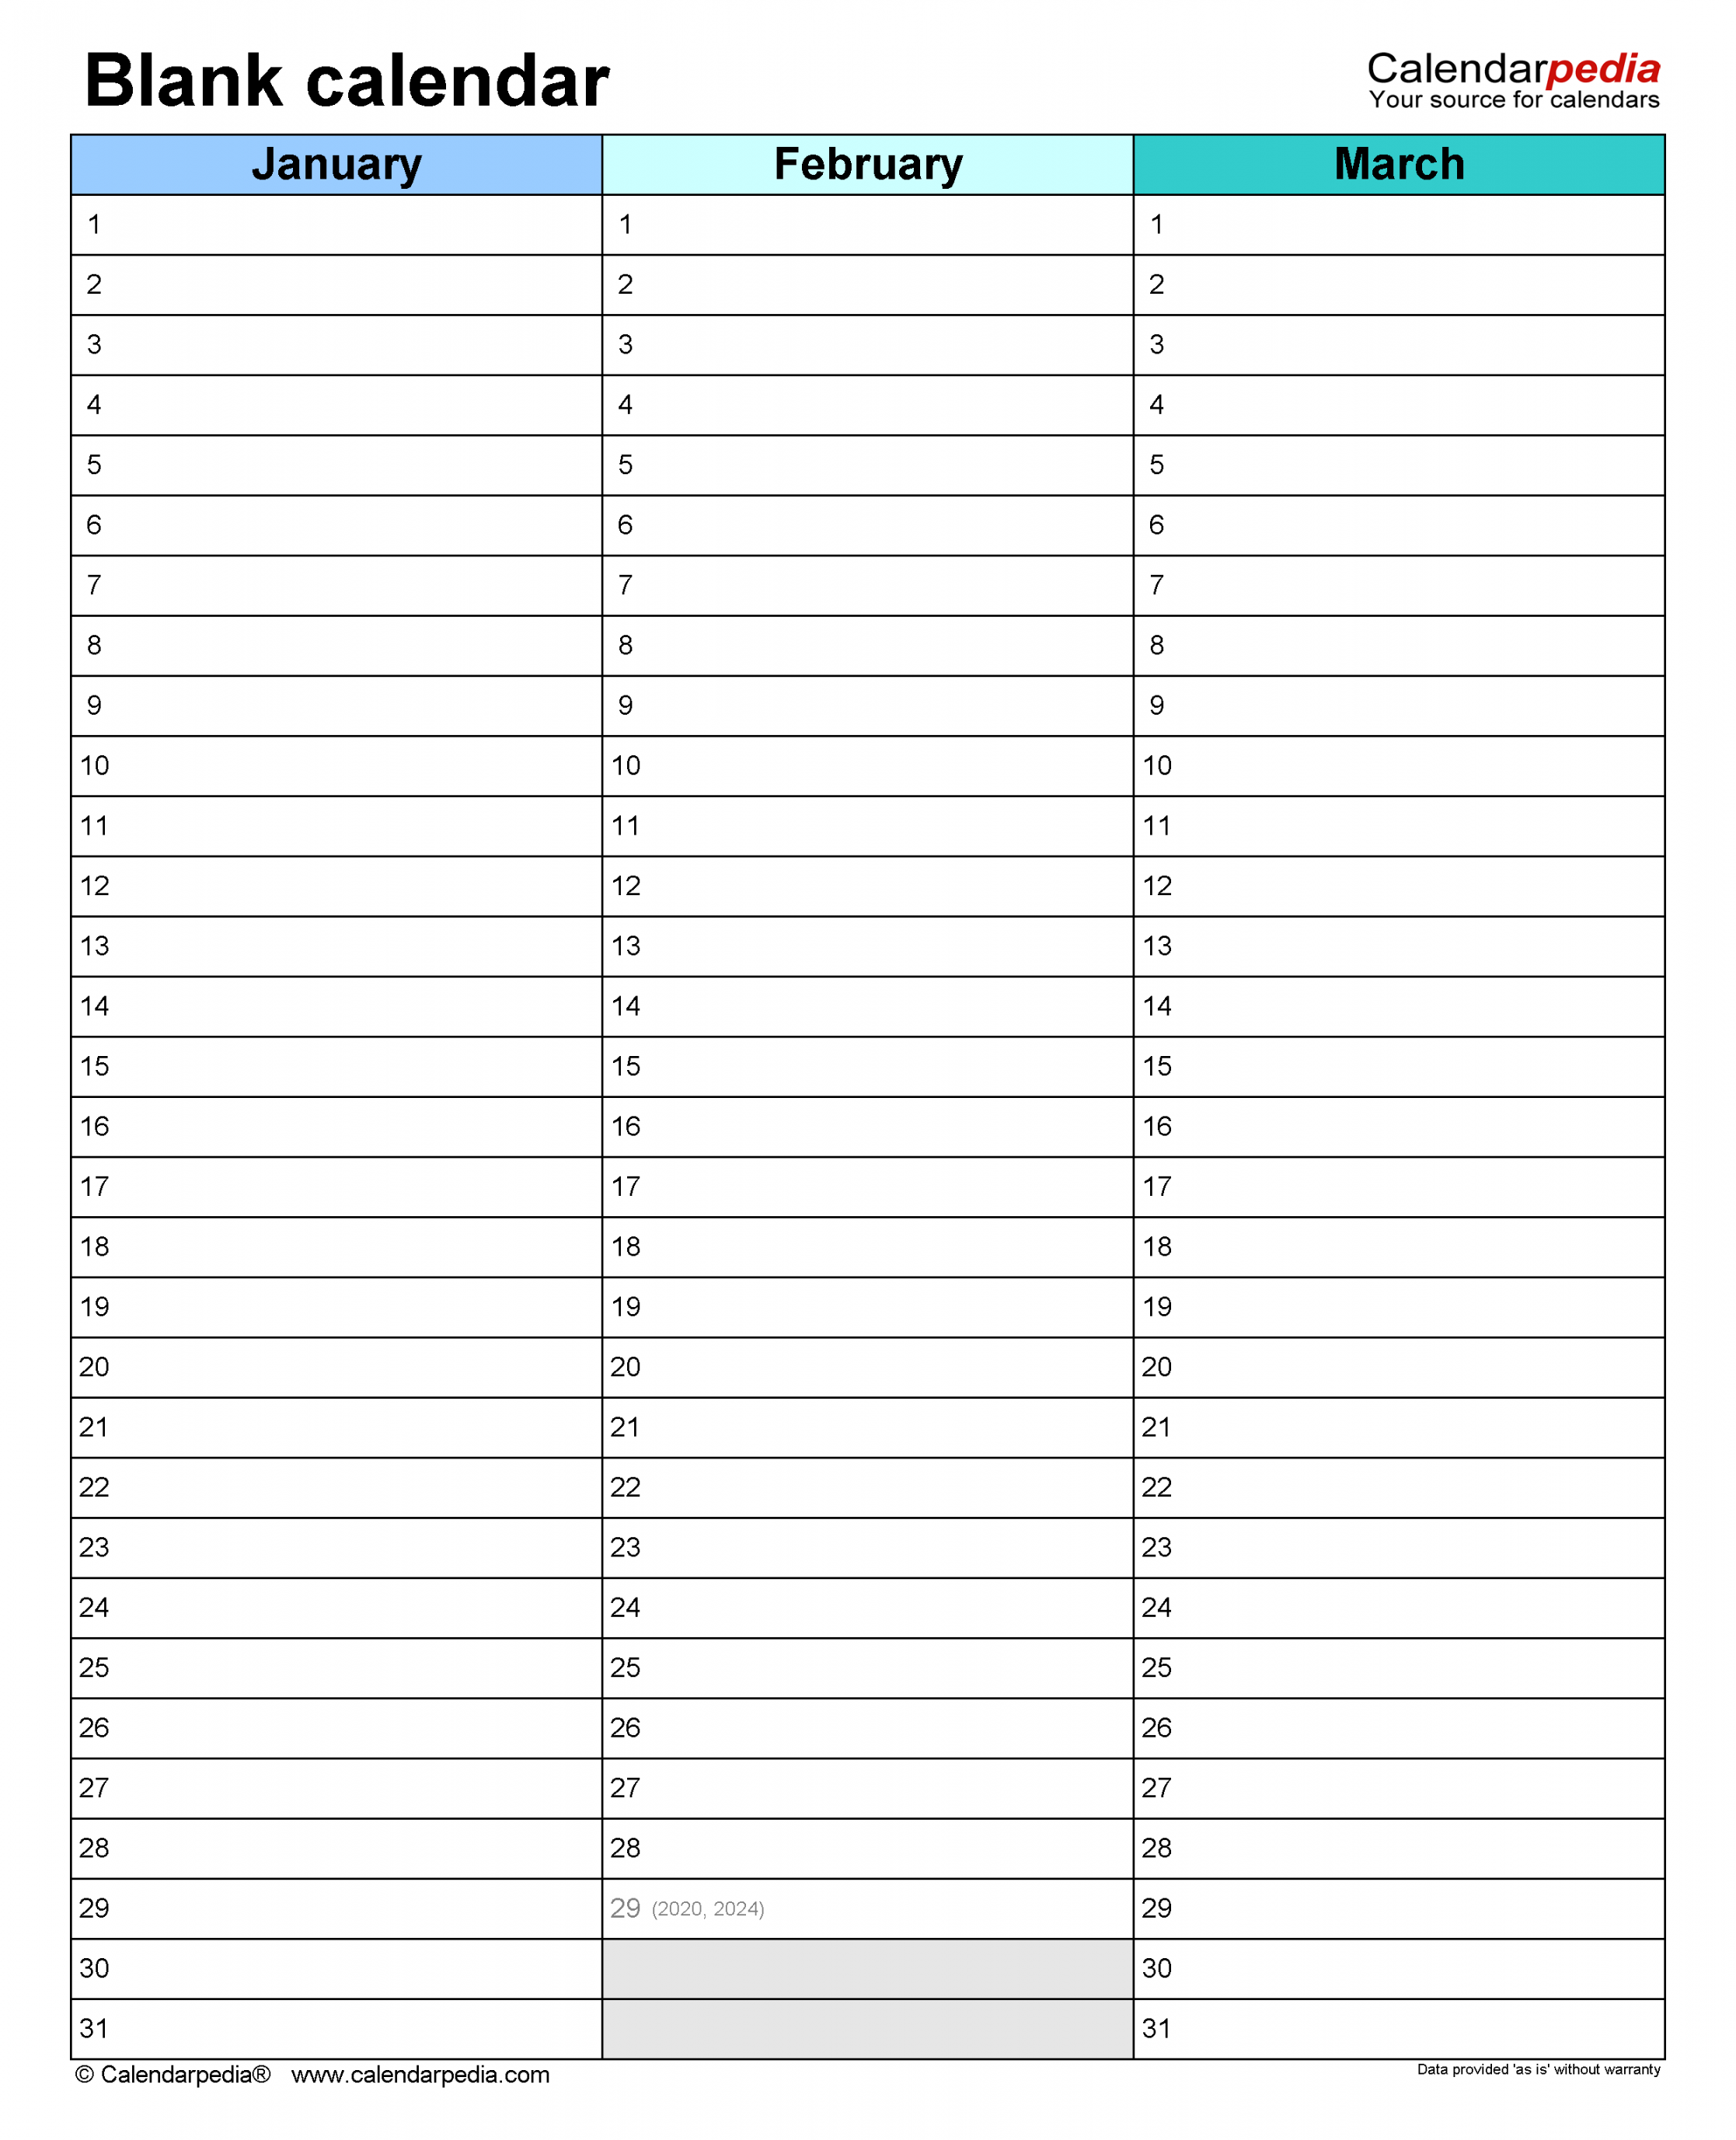 Blank Calendars - Free Printable PDF templates